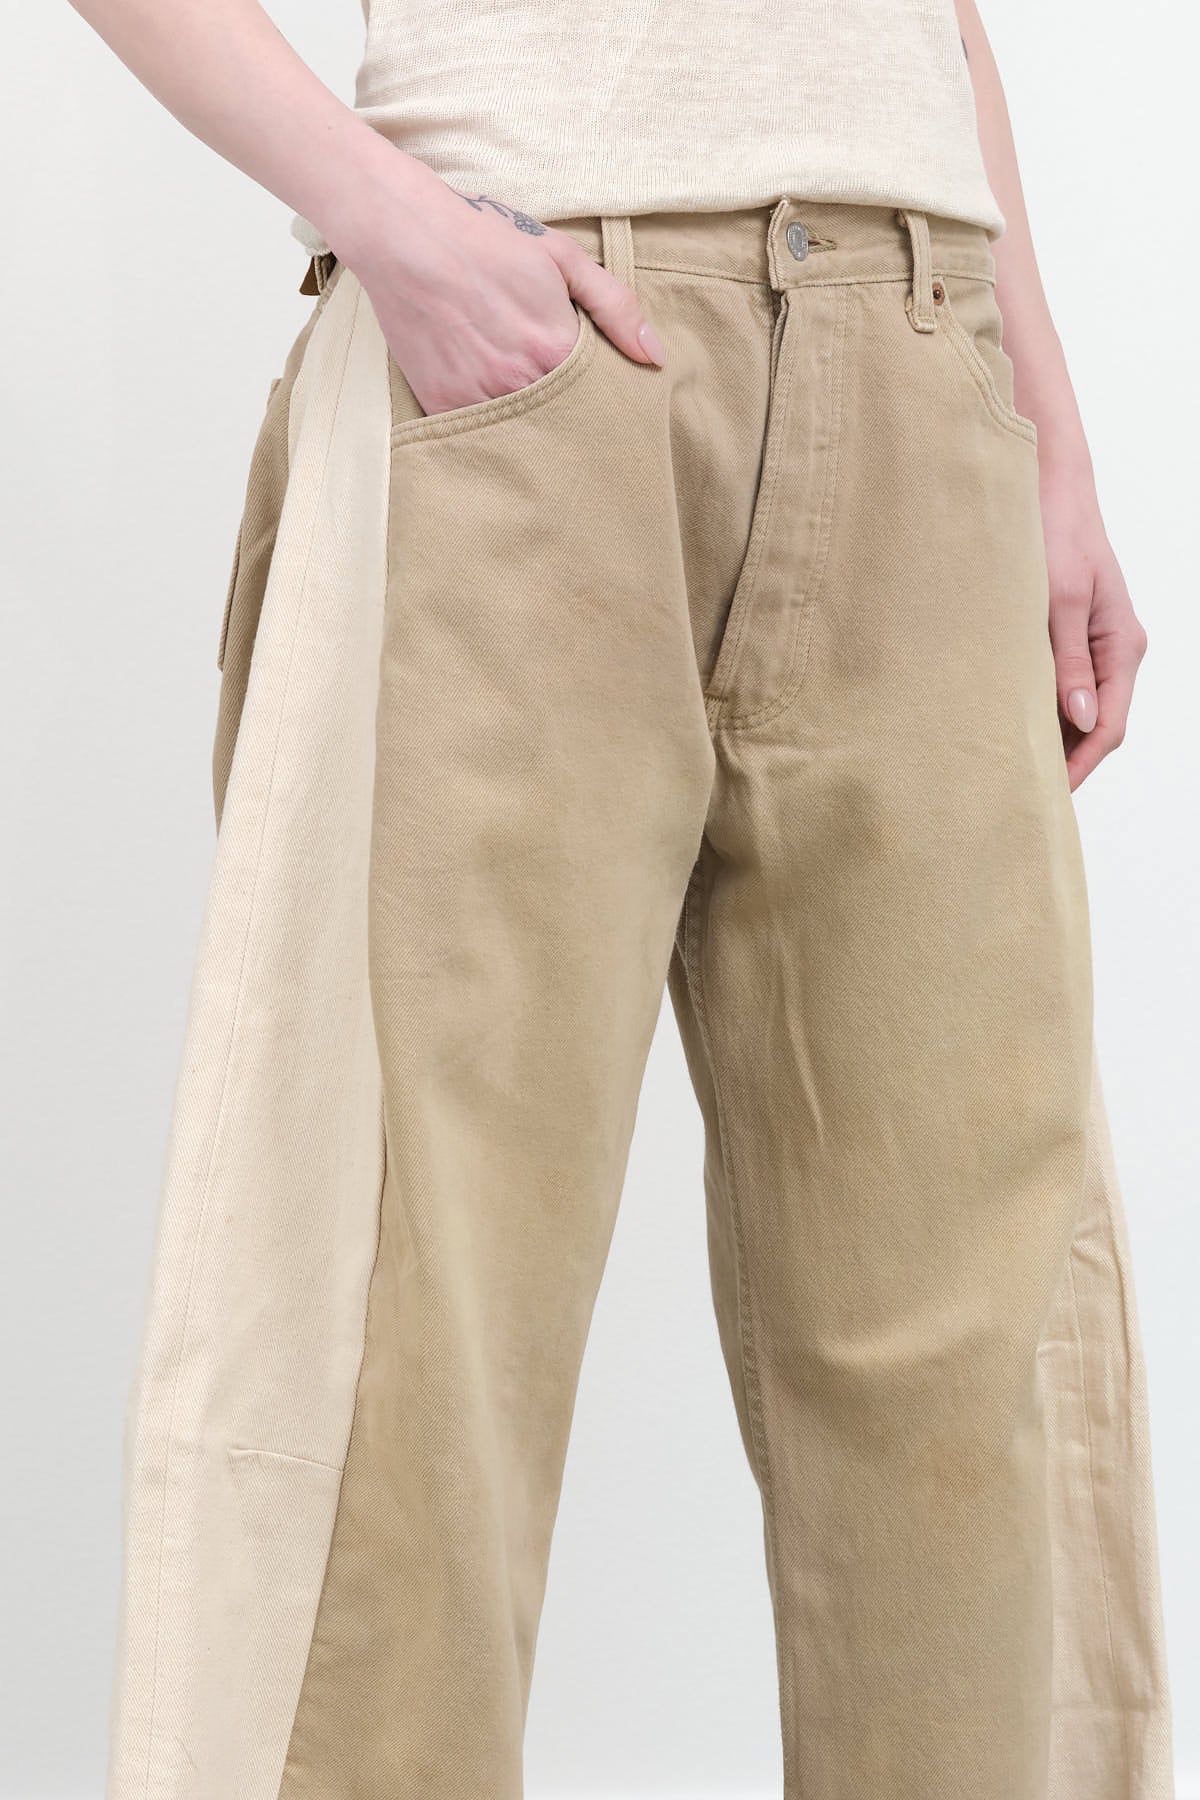 Pocket view of Vintage Lasso Jean in Ecru